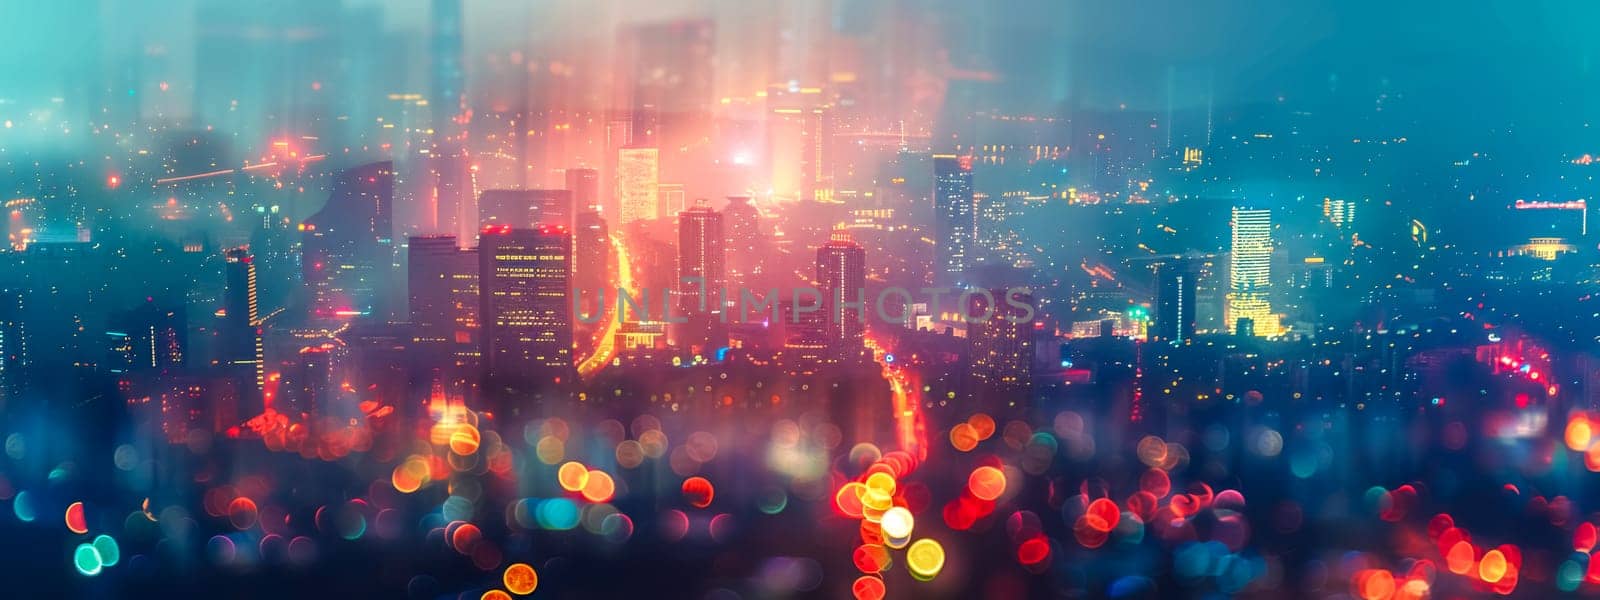 Vibrant city lights panorama at night by Edophoto